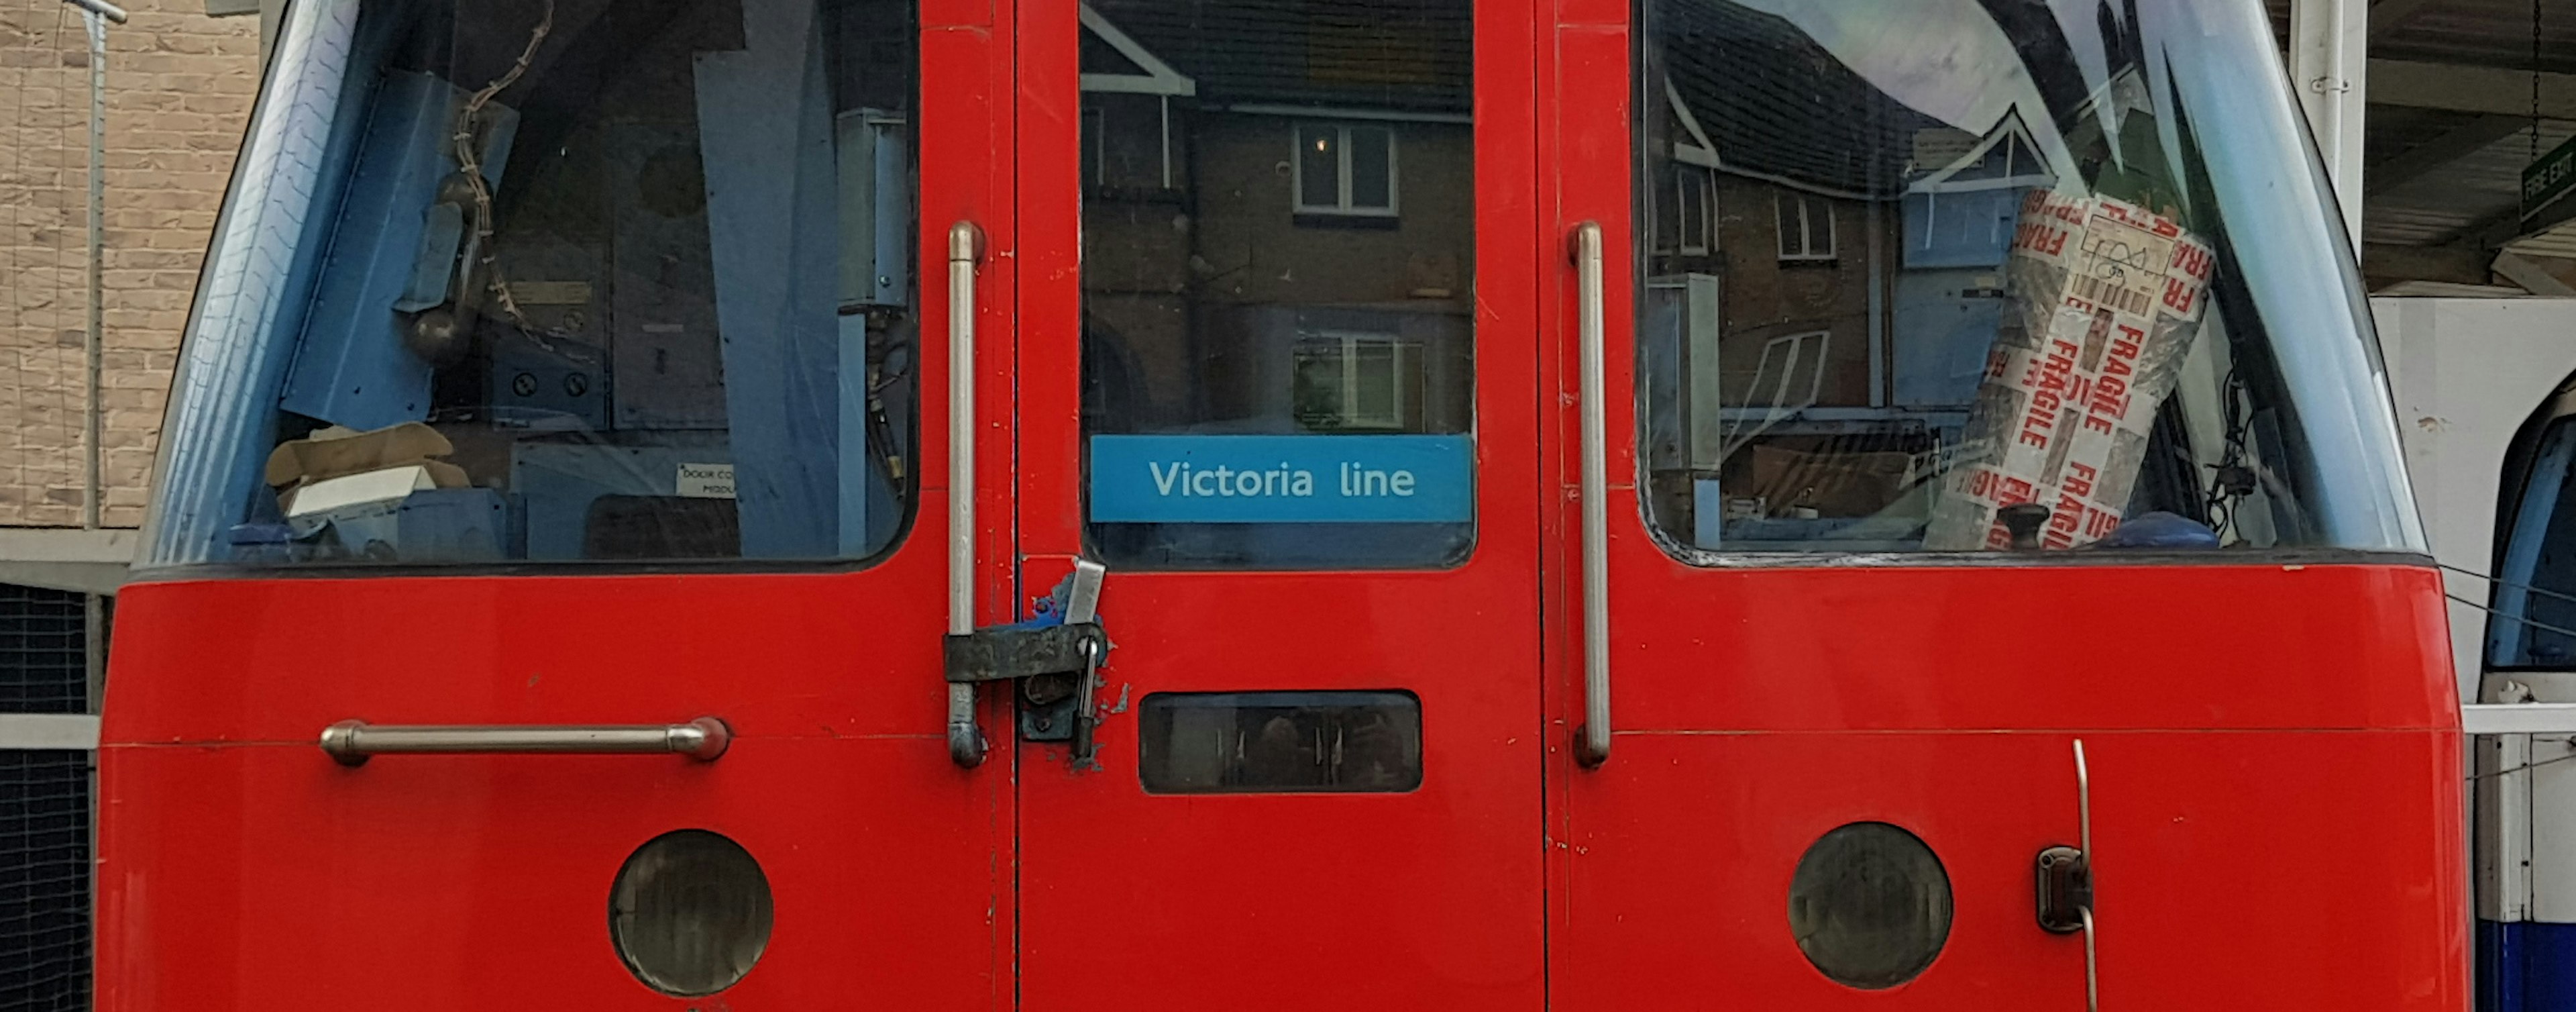 Victoria Line Underground Tube Carriage - image